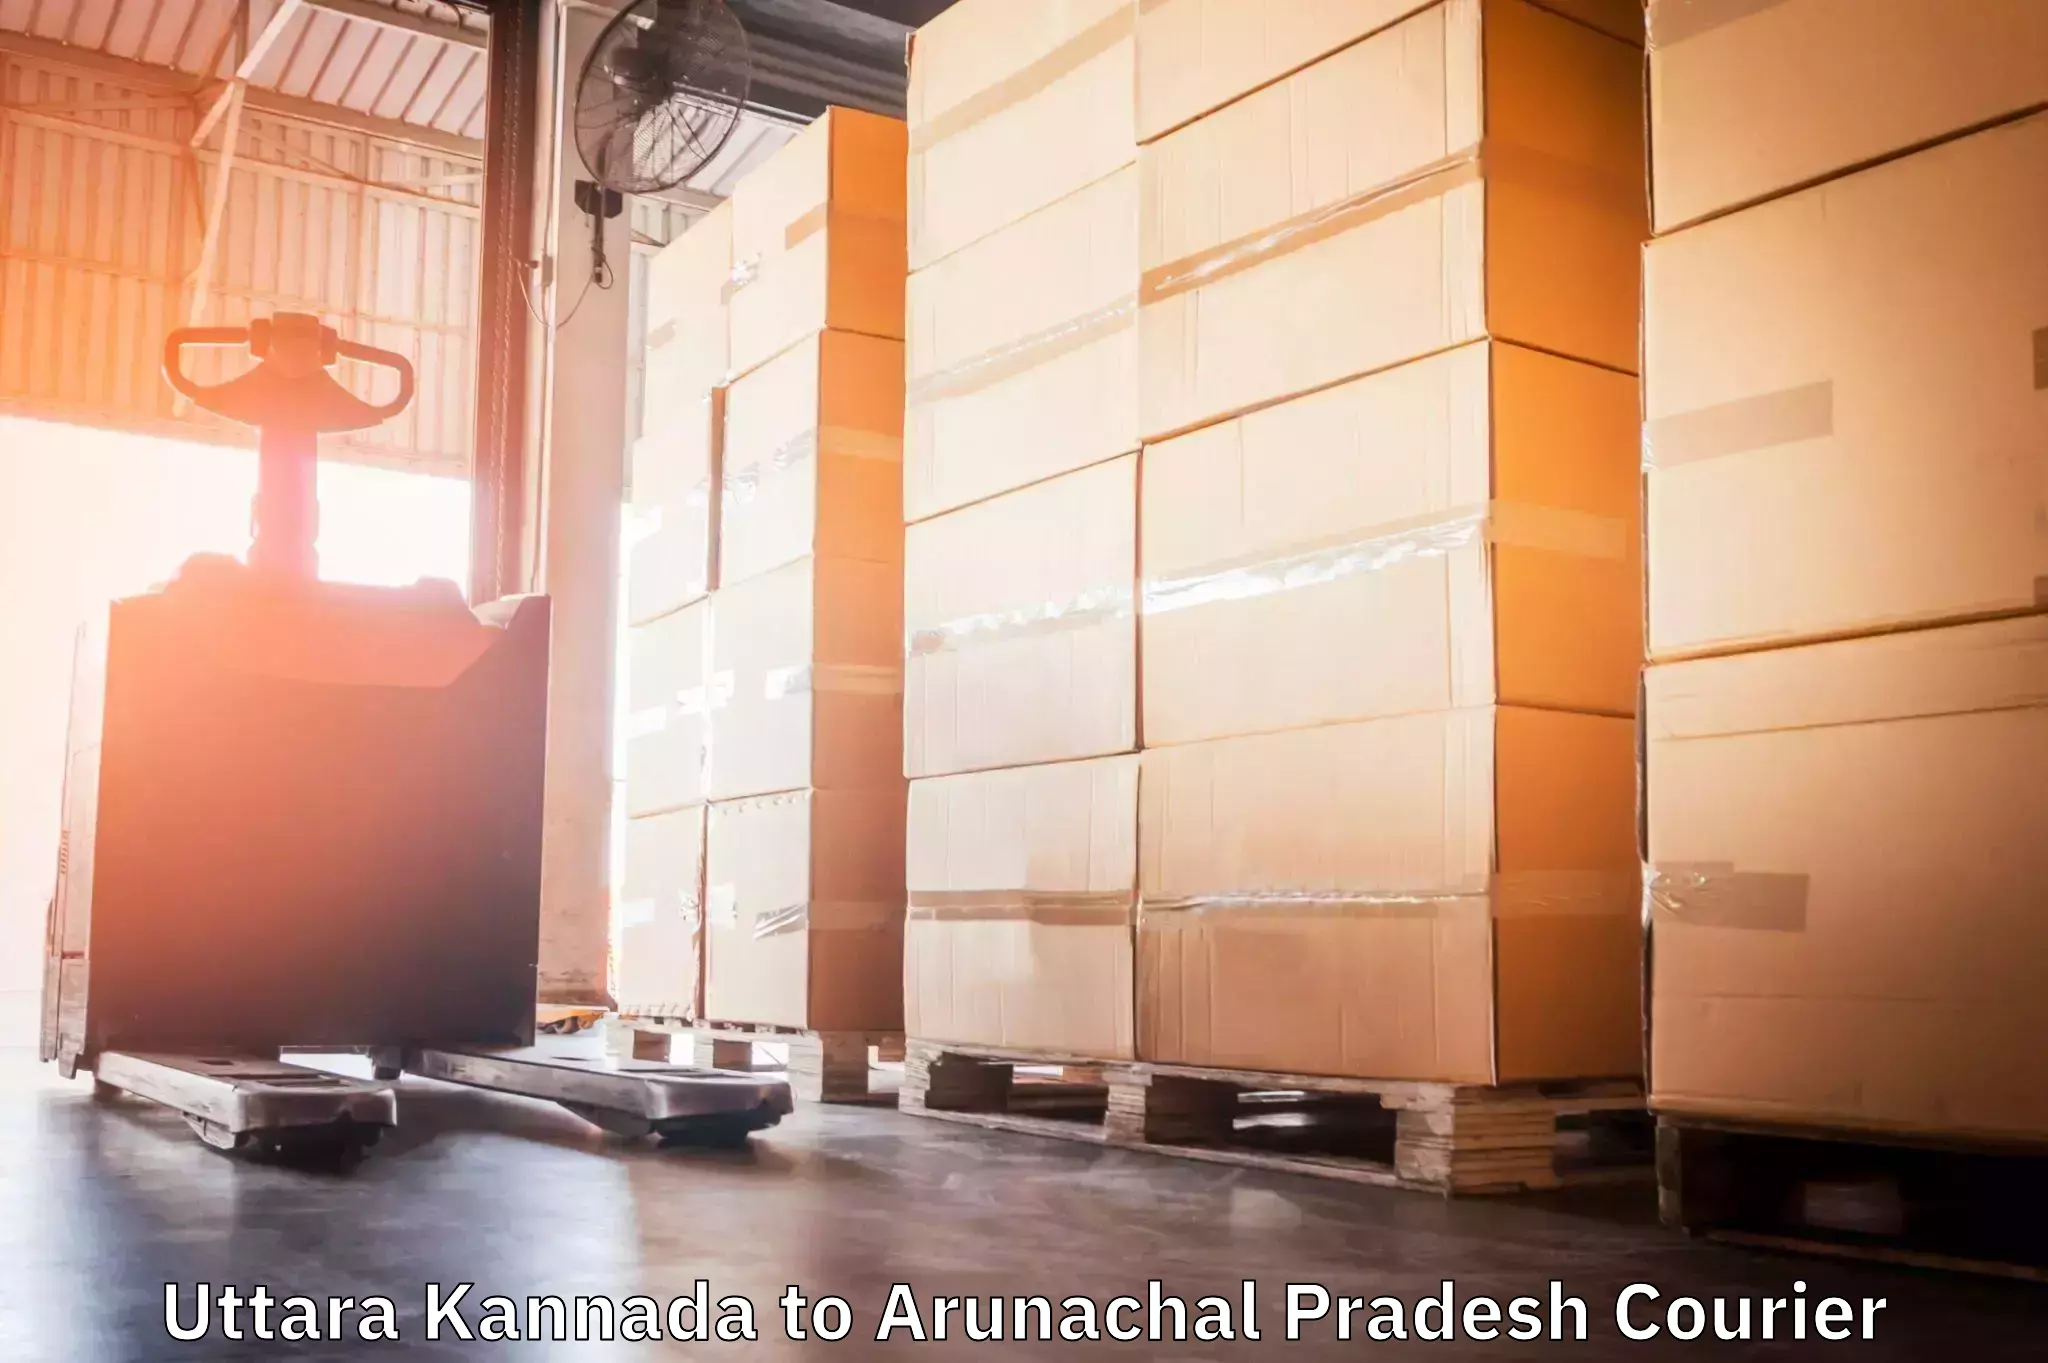 Next-day delivery options Uttara Kannada to Arunachal Pradesh